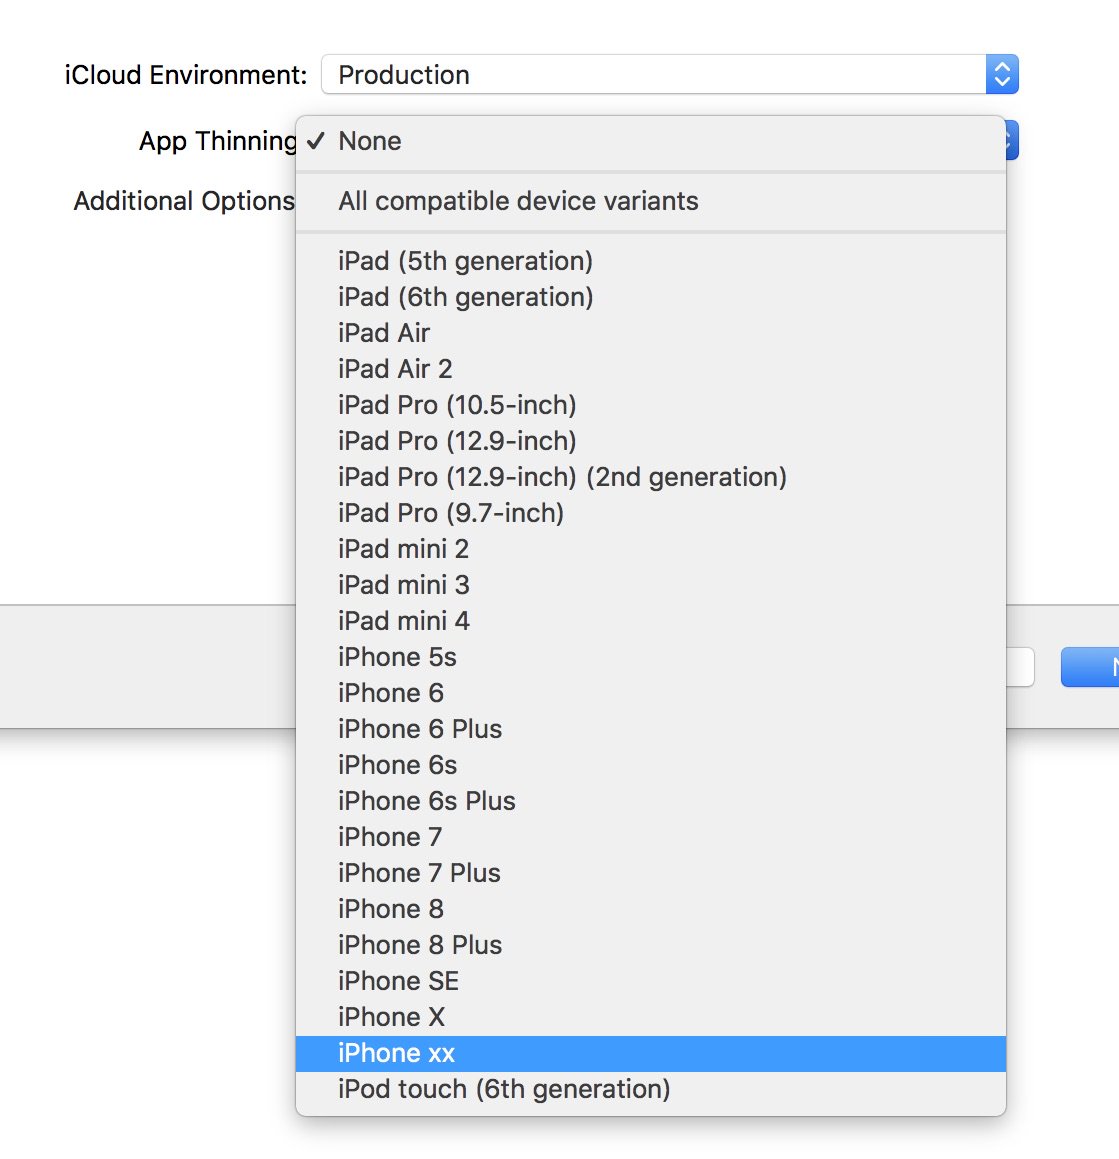 Xcode 10 Beta Reveals Next Generation iPhone SE With iPhone 7 Internals?